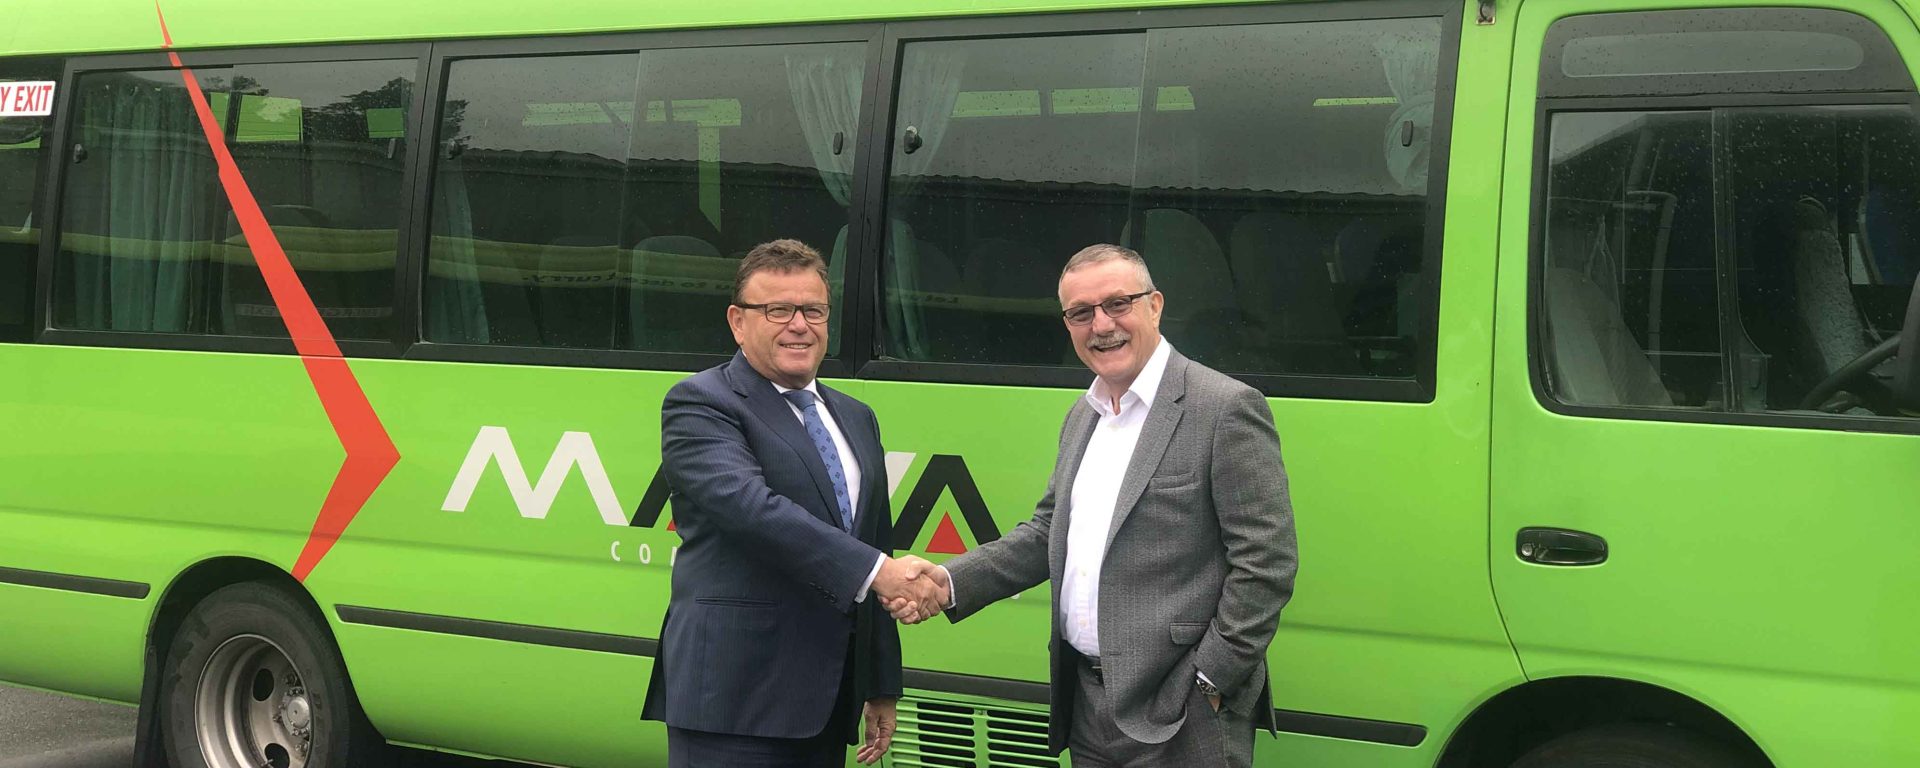 CEO-Transdev-mana-coach-services-handover